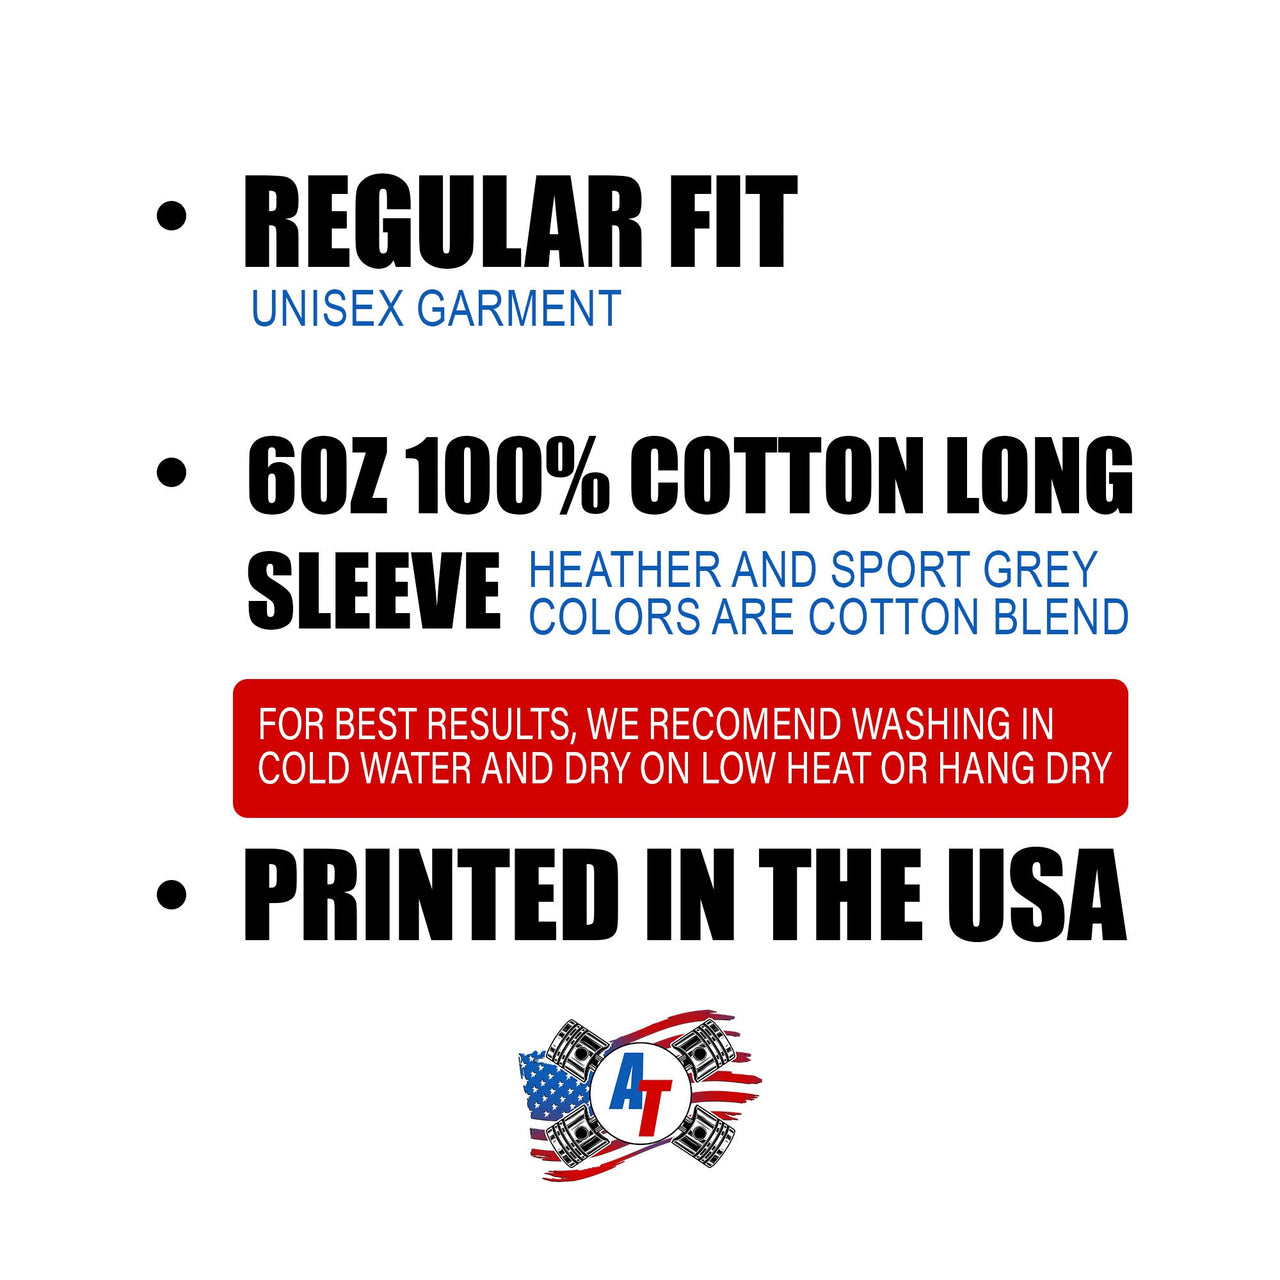 Long Sleeve Shirt Information